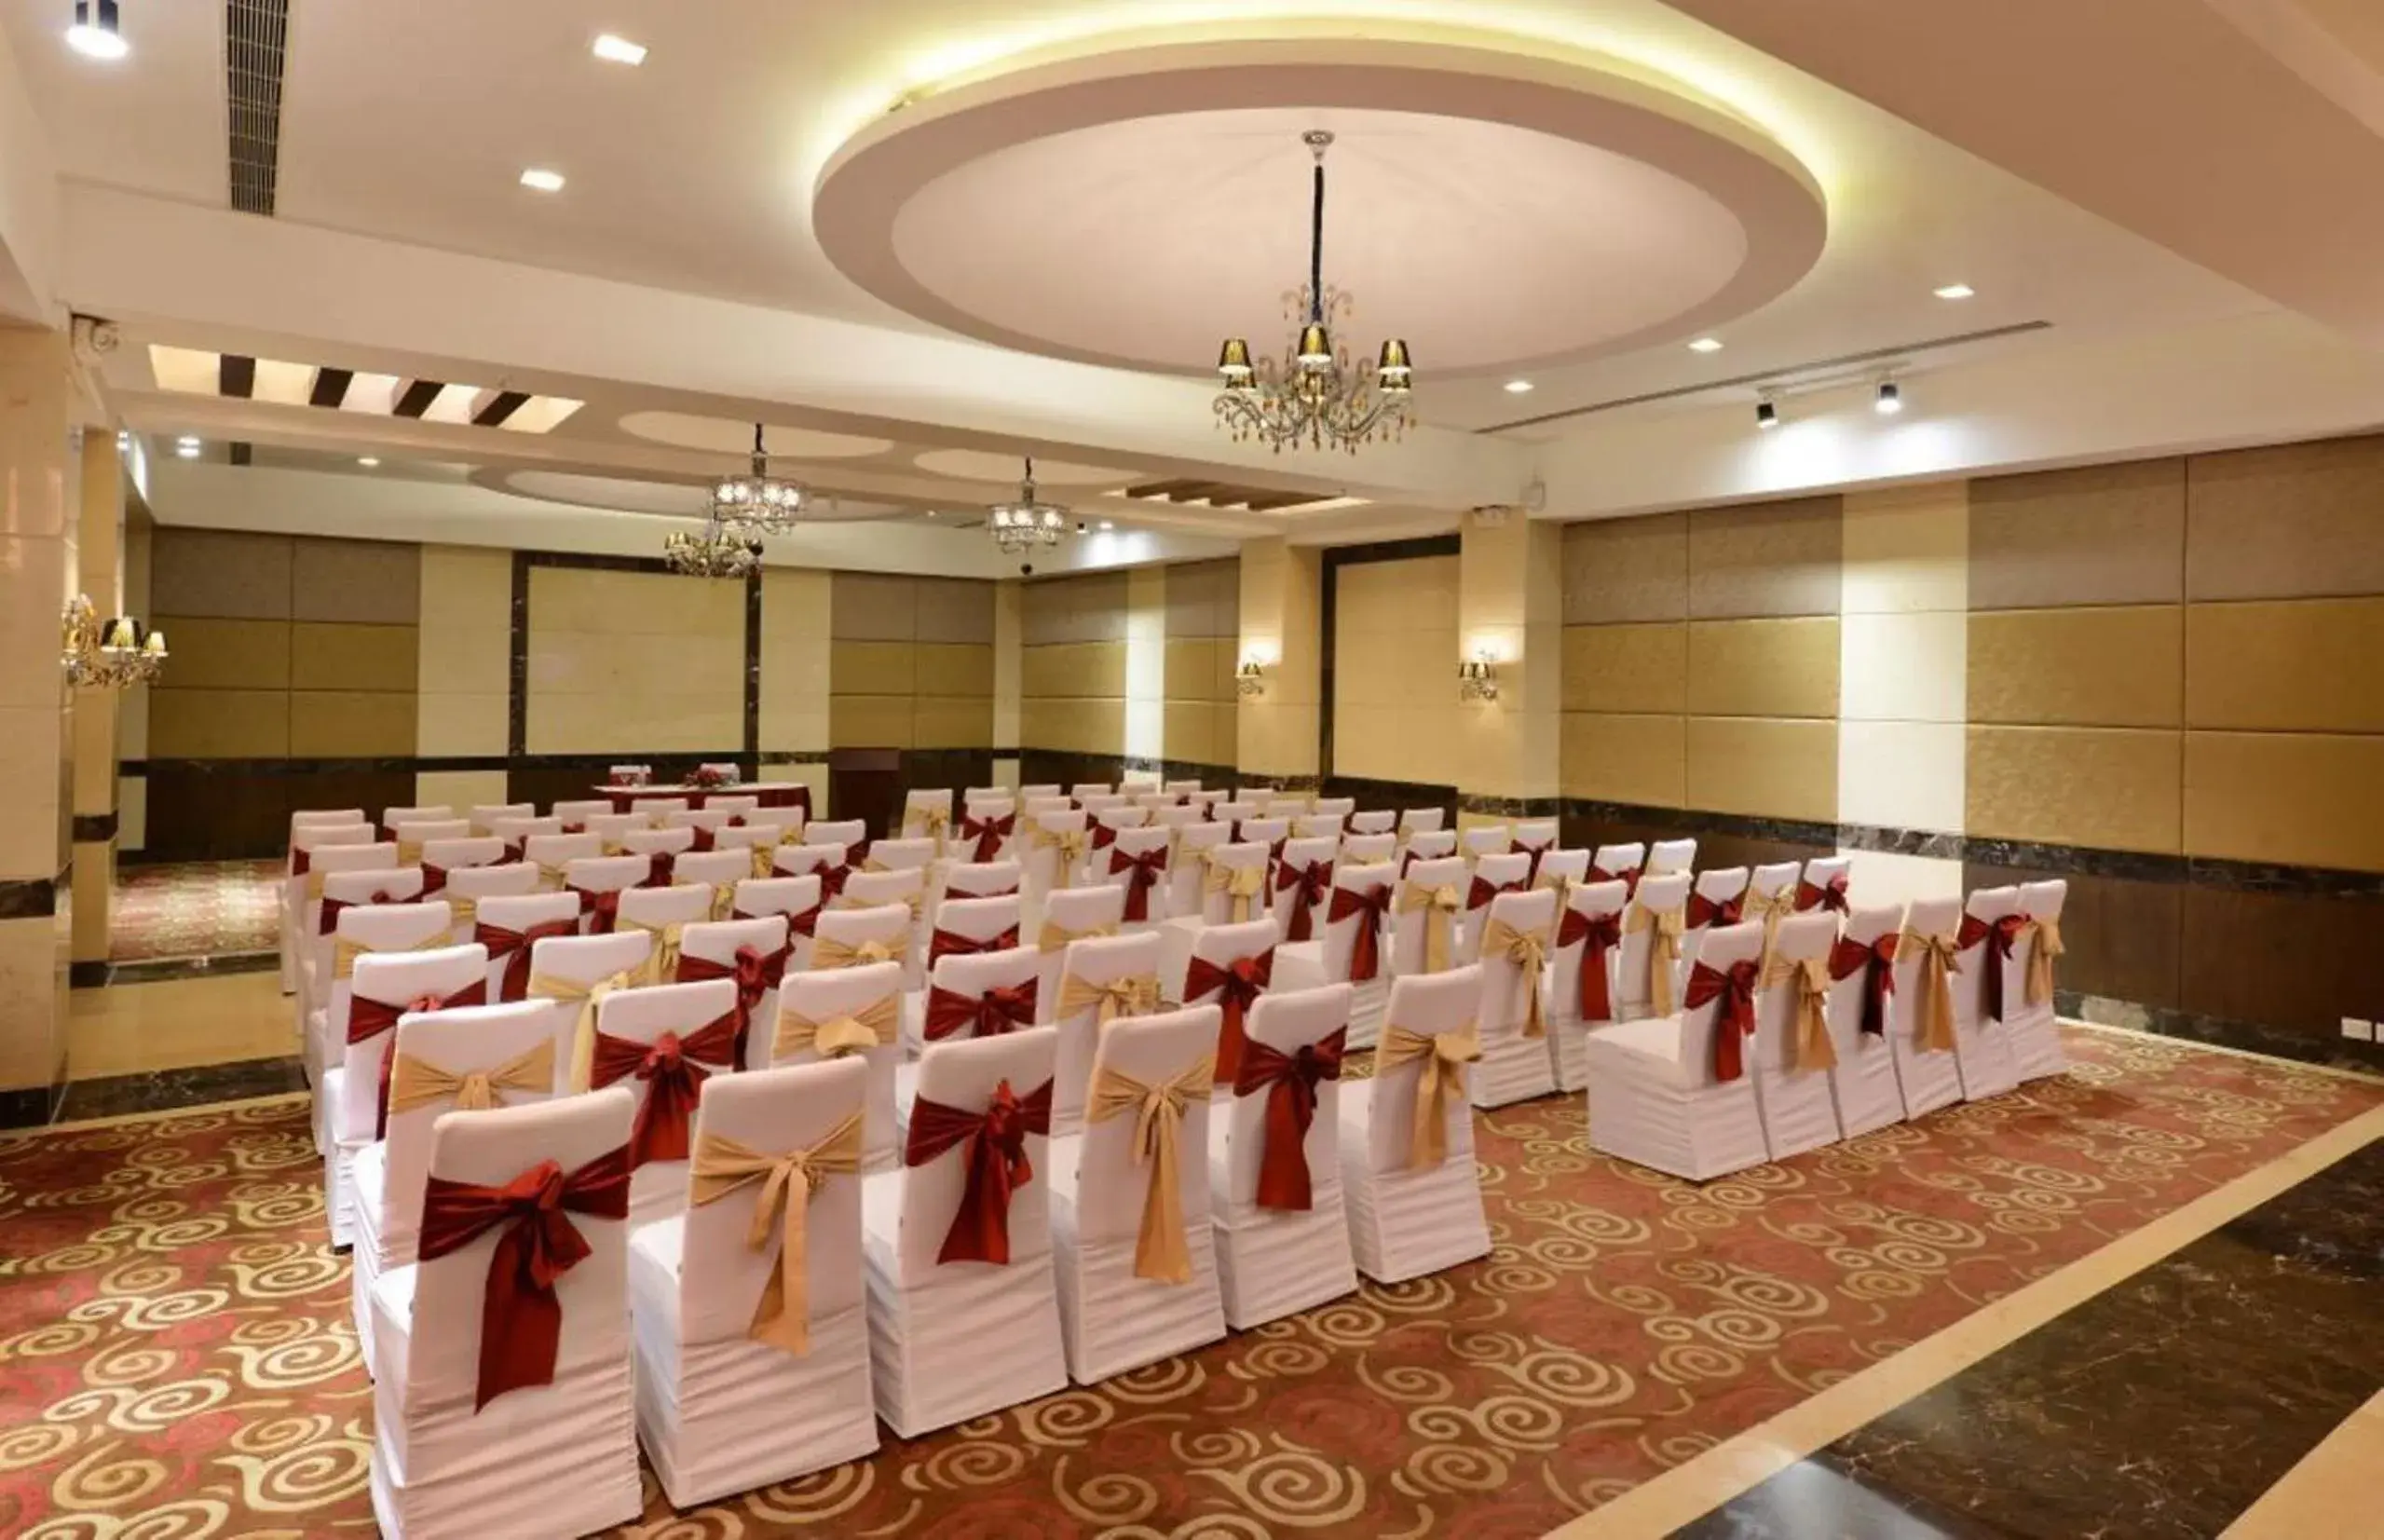 Banquet/Function facilities, Banquet Facilities in Quality Inn Gurgaon